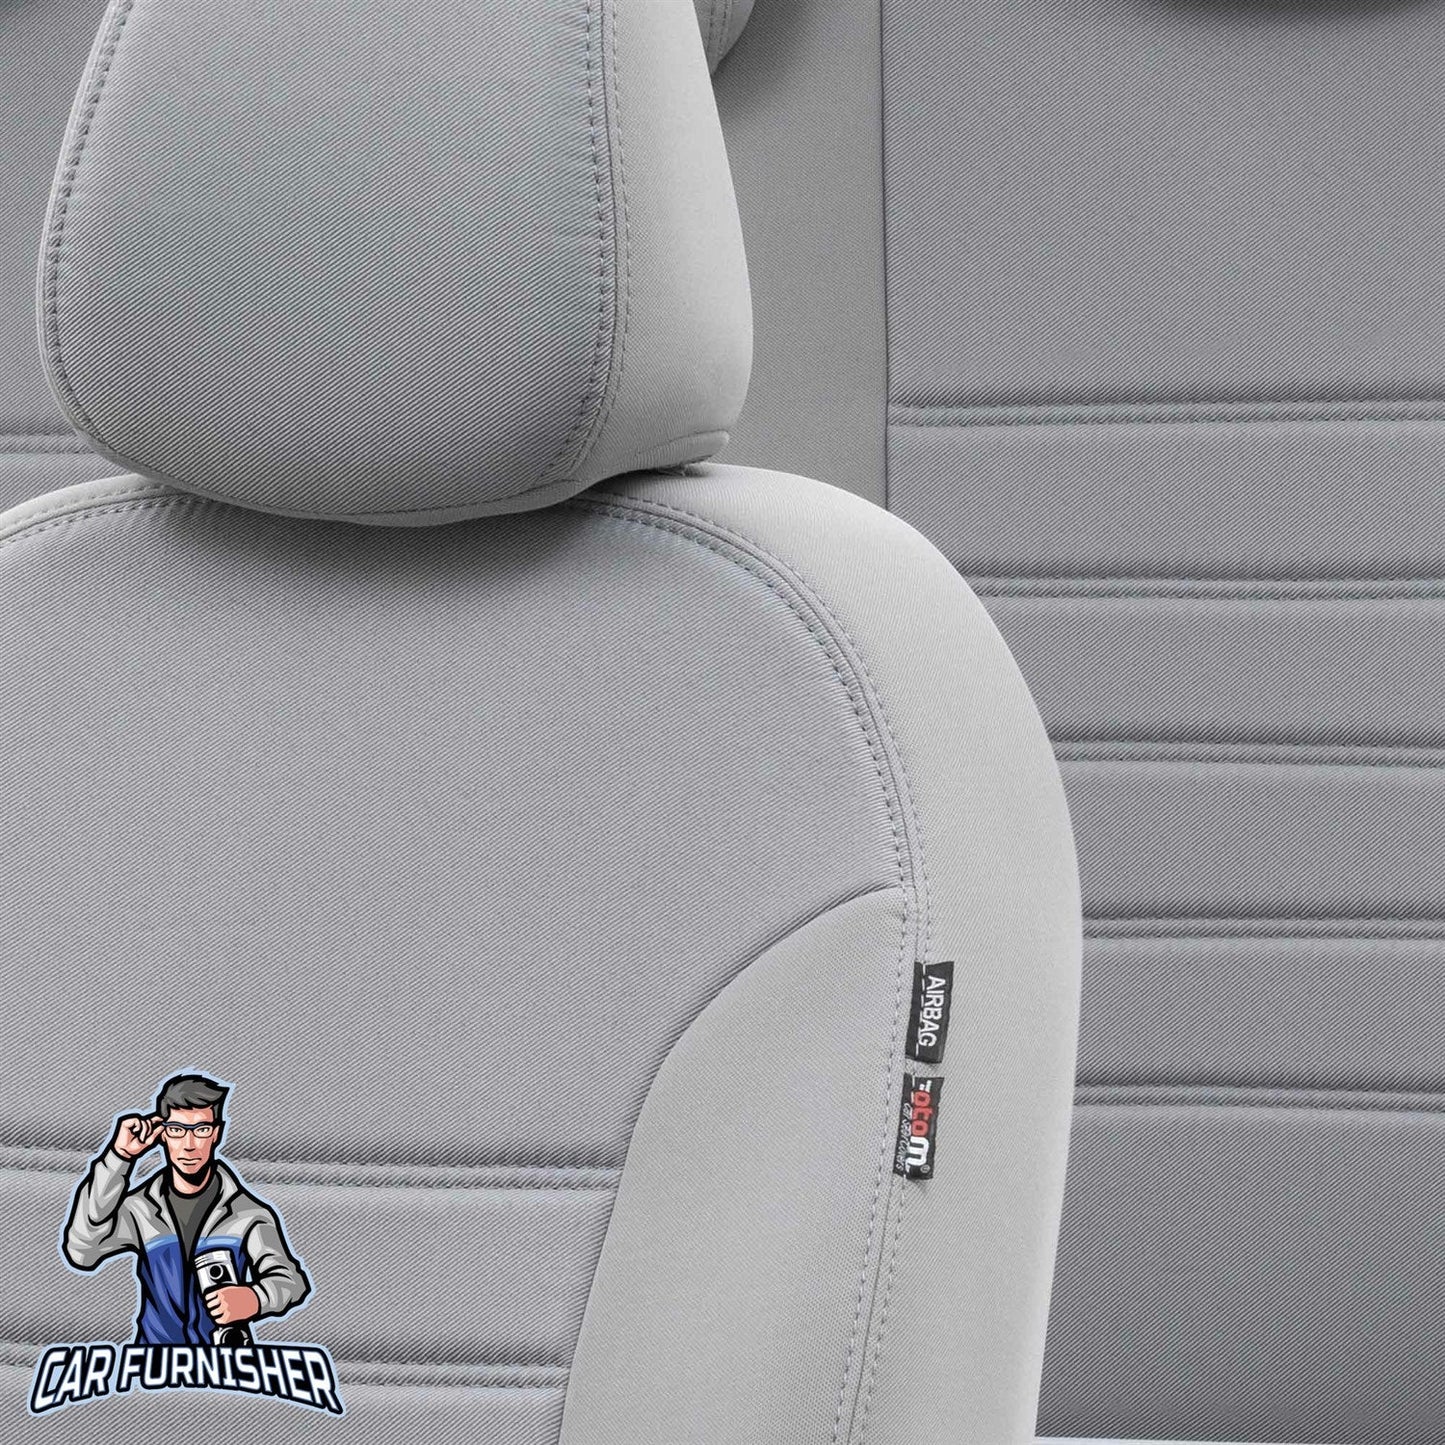 Man TGE Seat Covers Original Jacquard Design Light Gray Jacquard Fabric